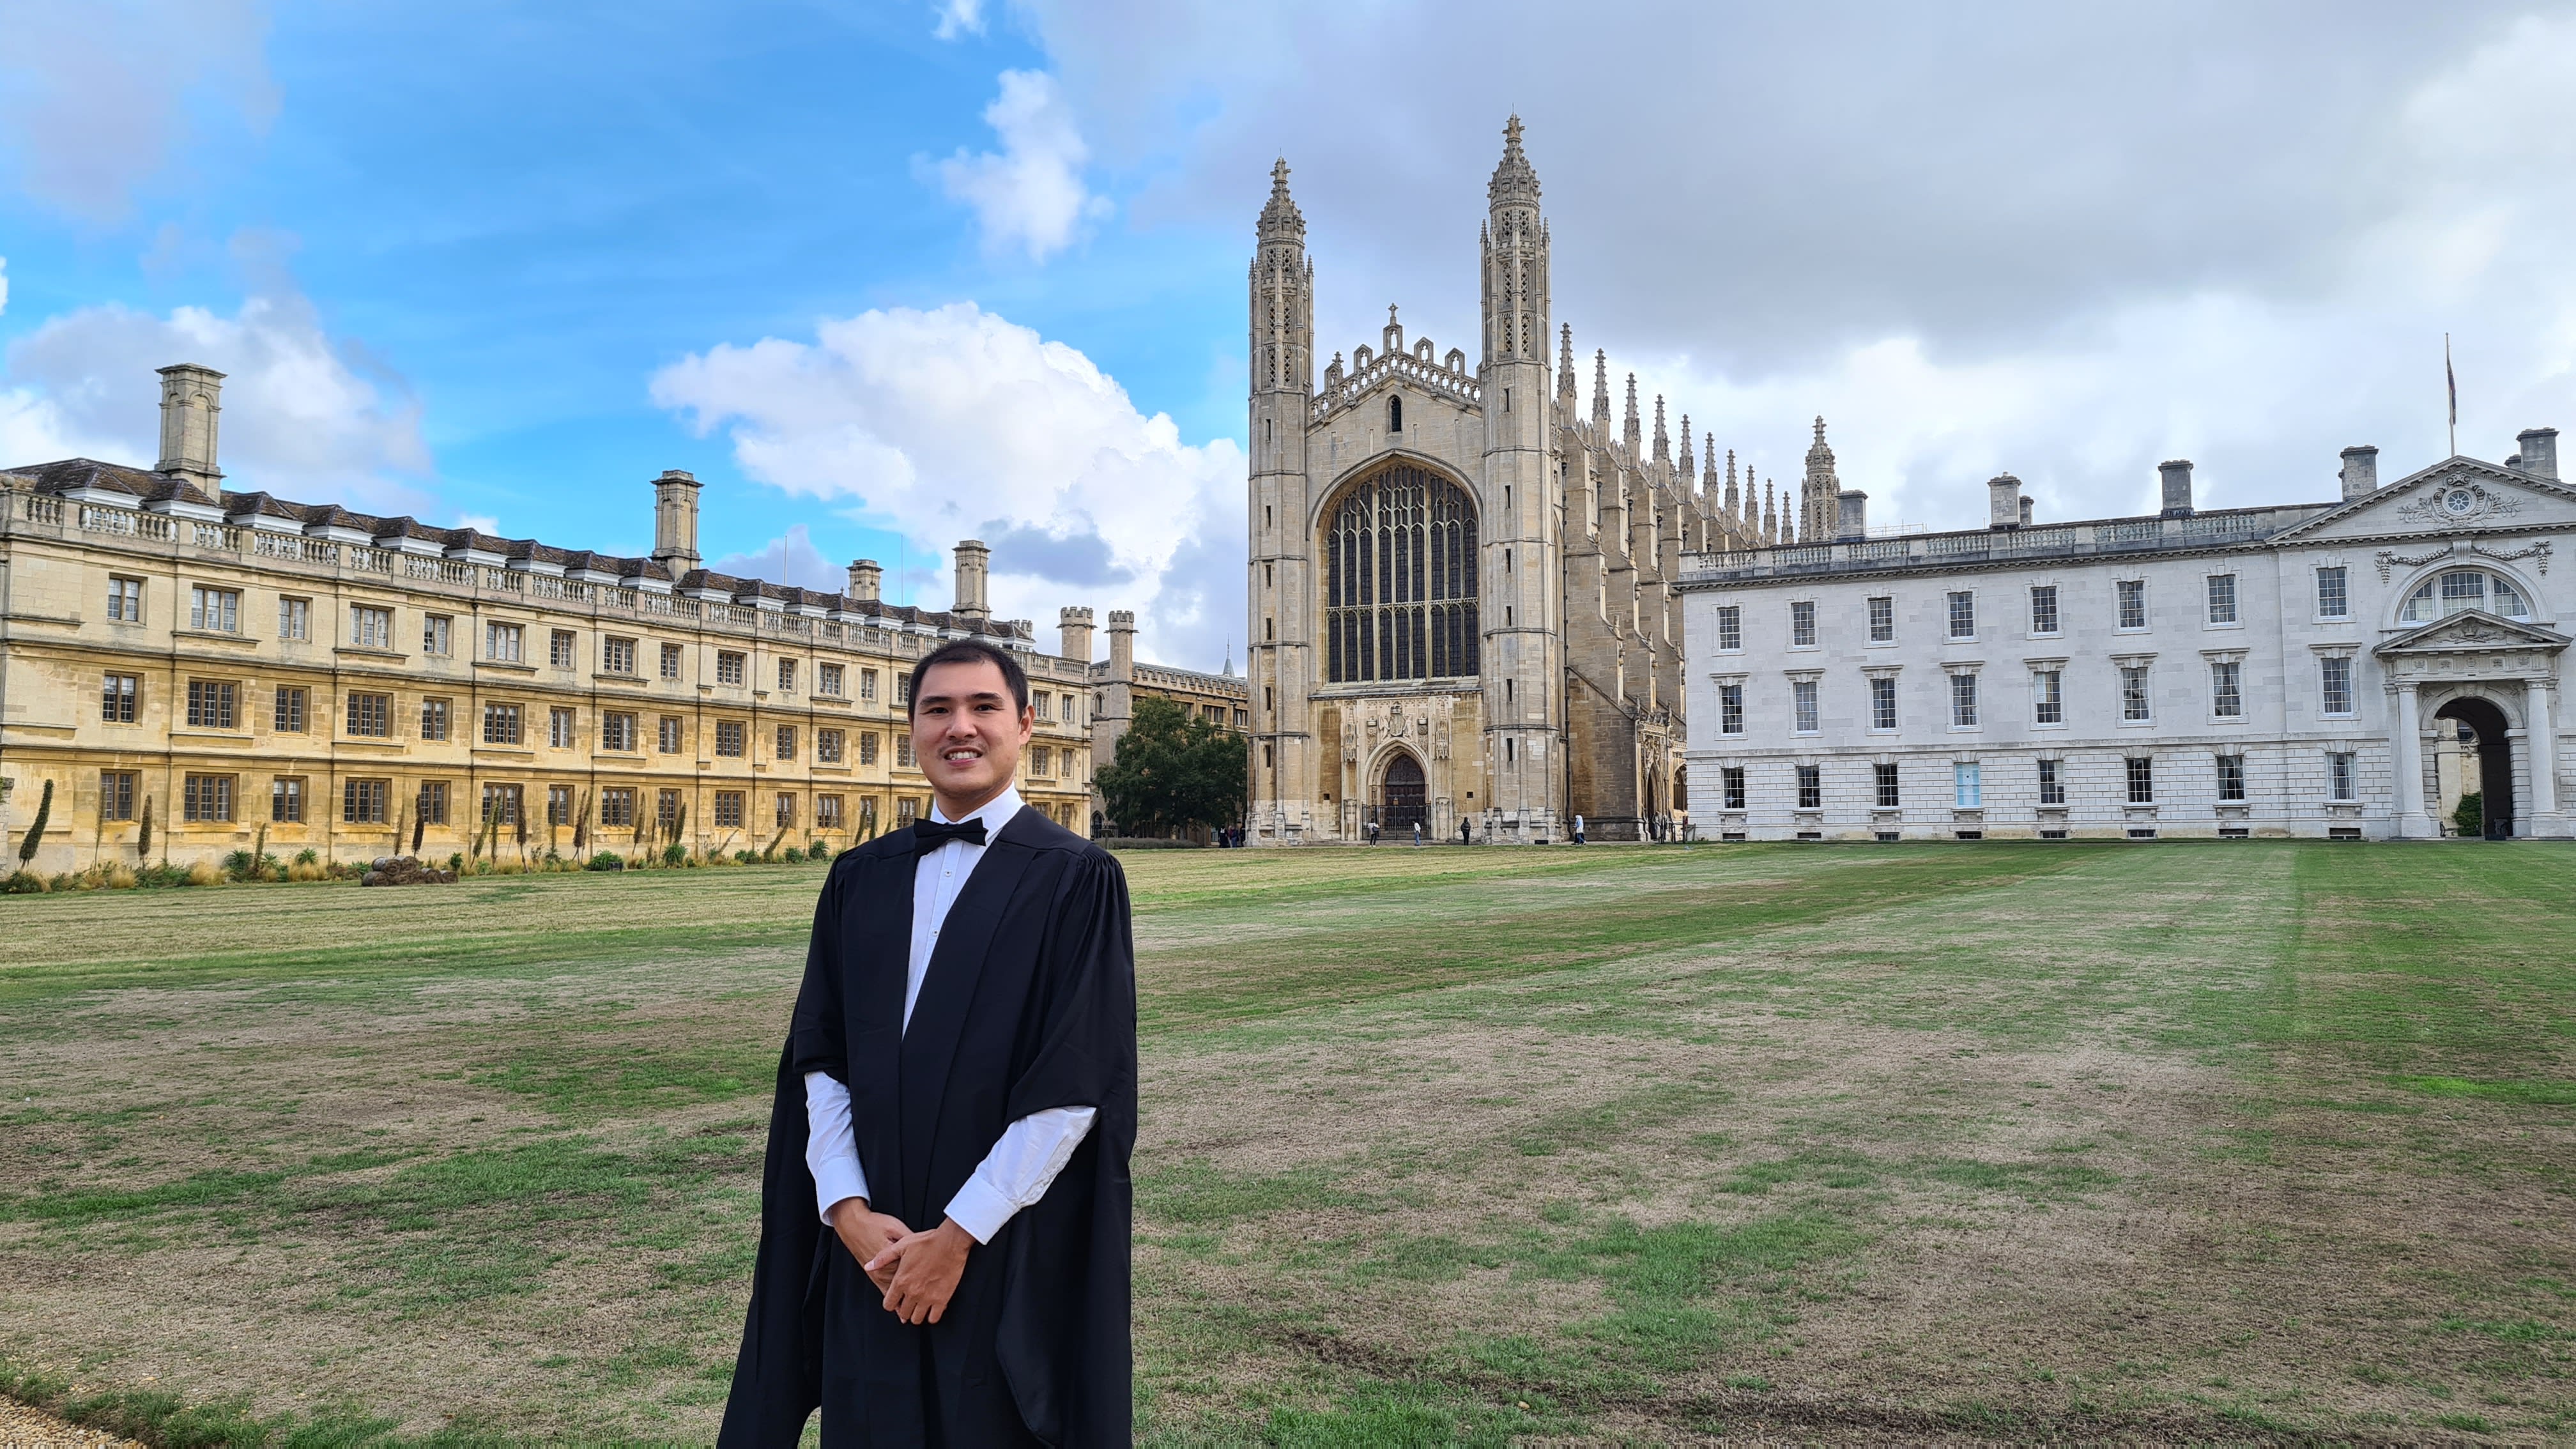 Leo Nyein Zaw Ko standing in university robes outside of the University of Cambridge